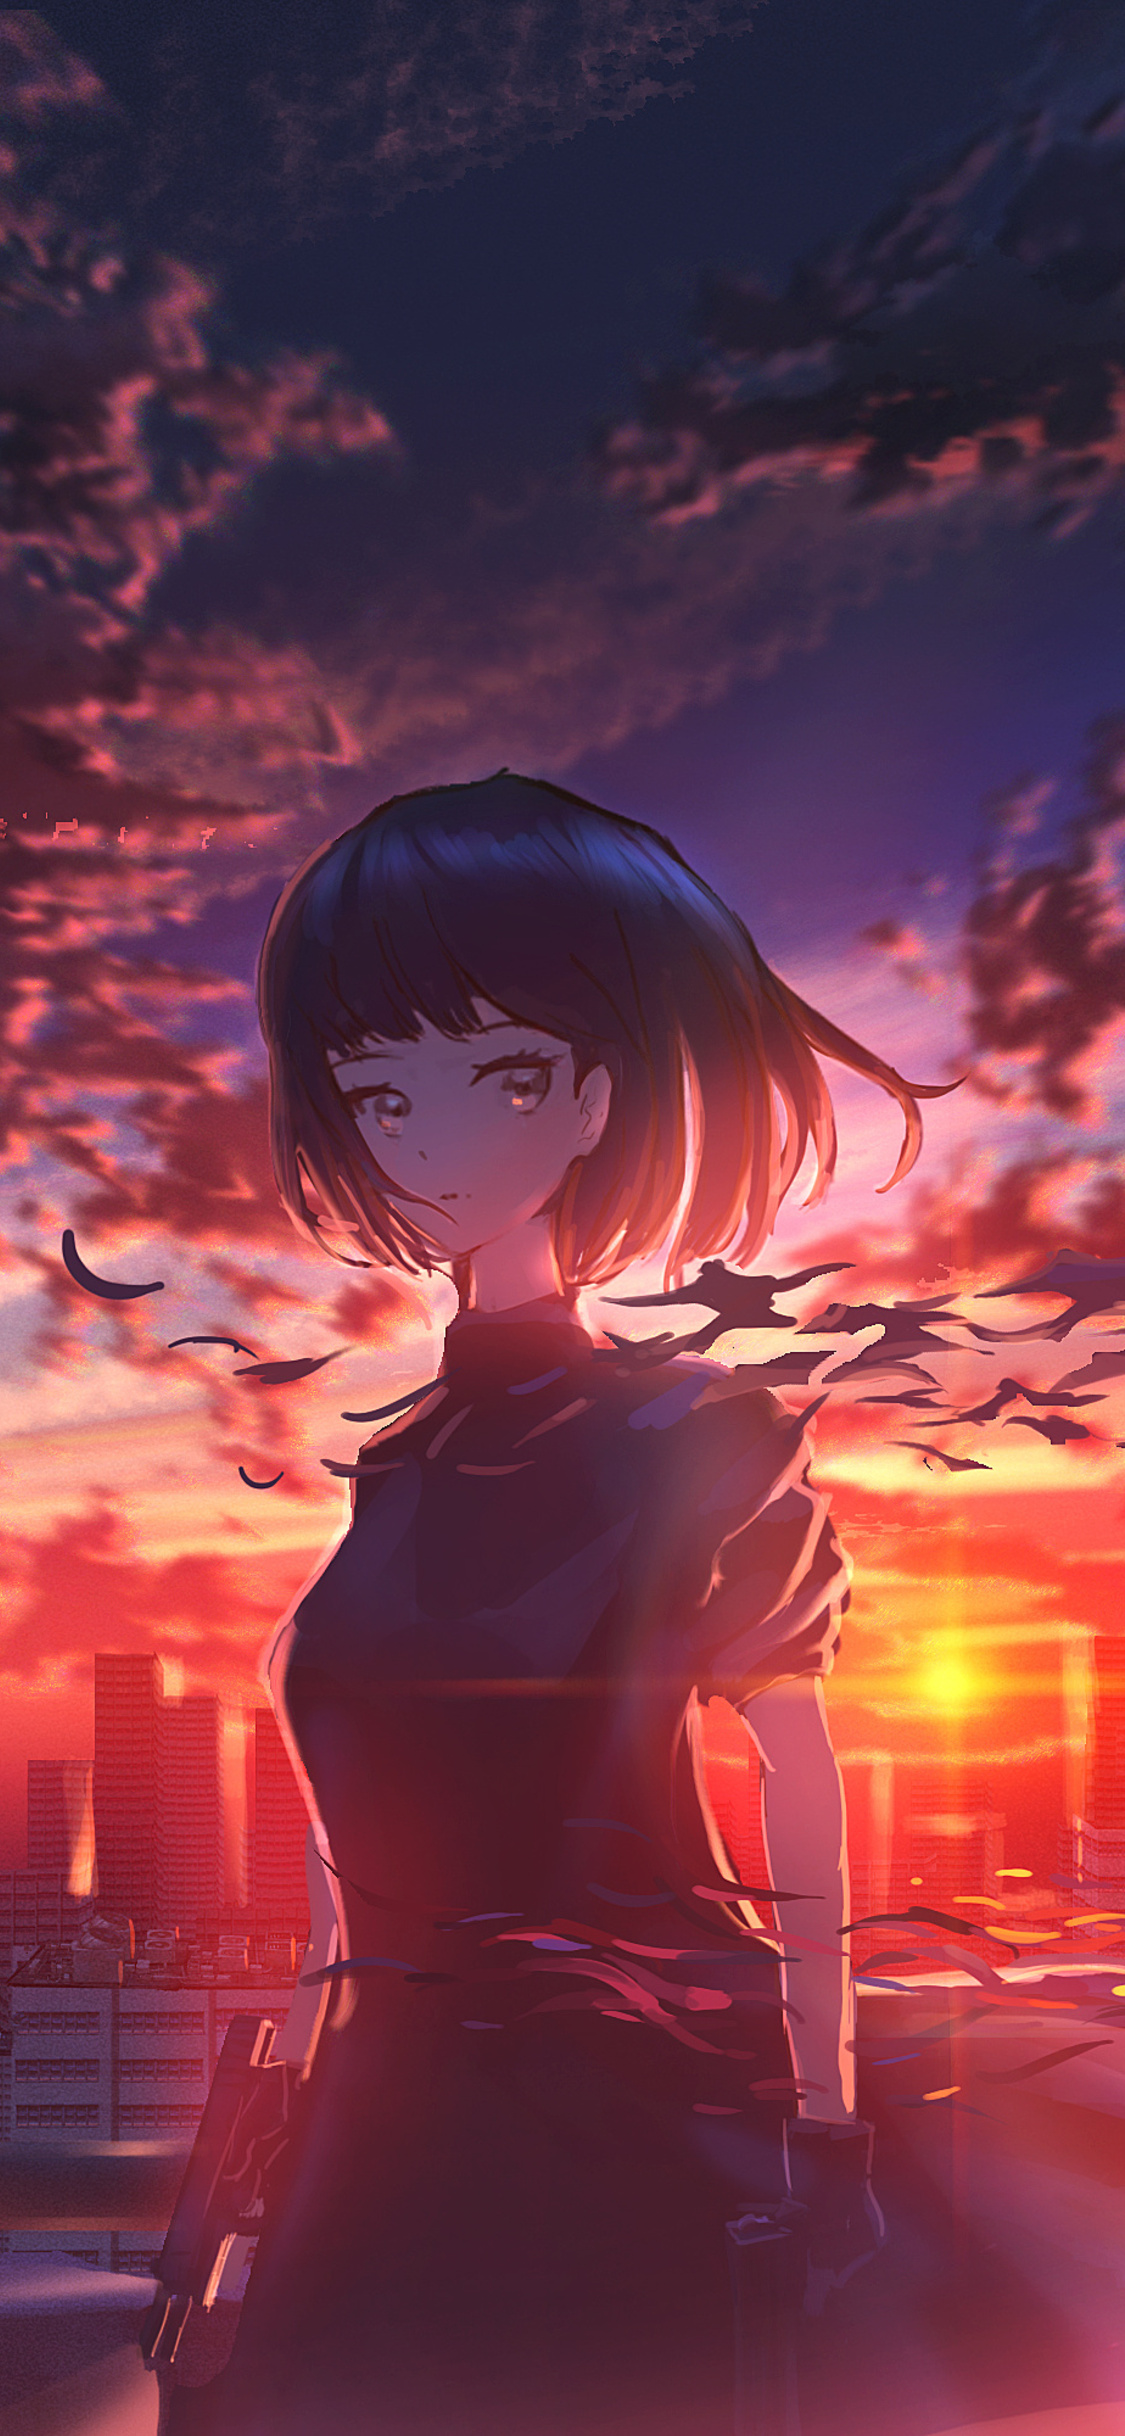 Cool Anime iPhone Wallpaper HD Wallpaper